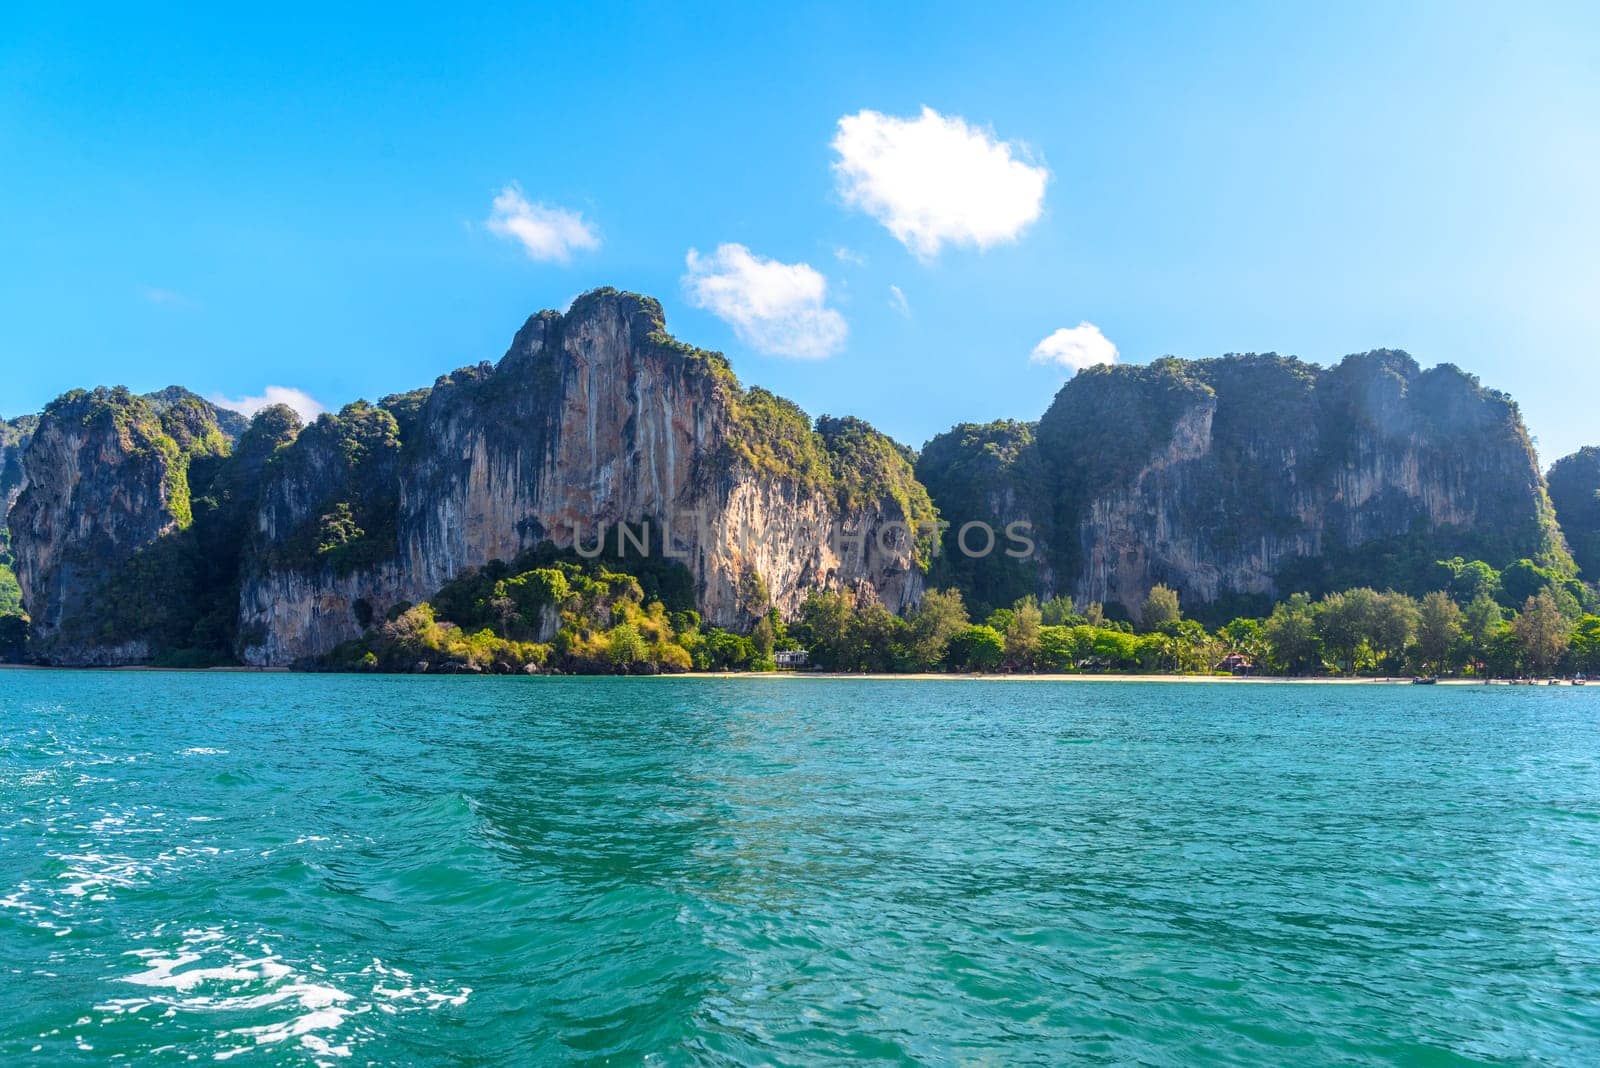 Huge cliff rocks in azure water, Railay beach, Ao Nang, Krabi, Thailand by Eagle2308